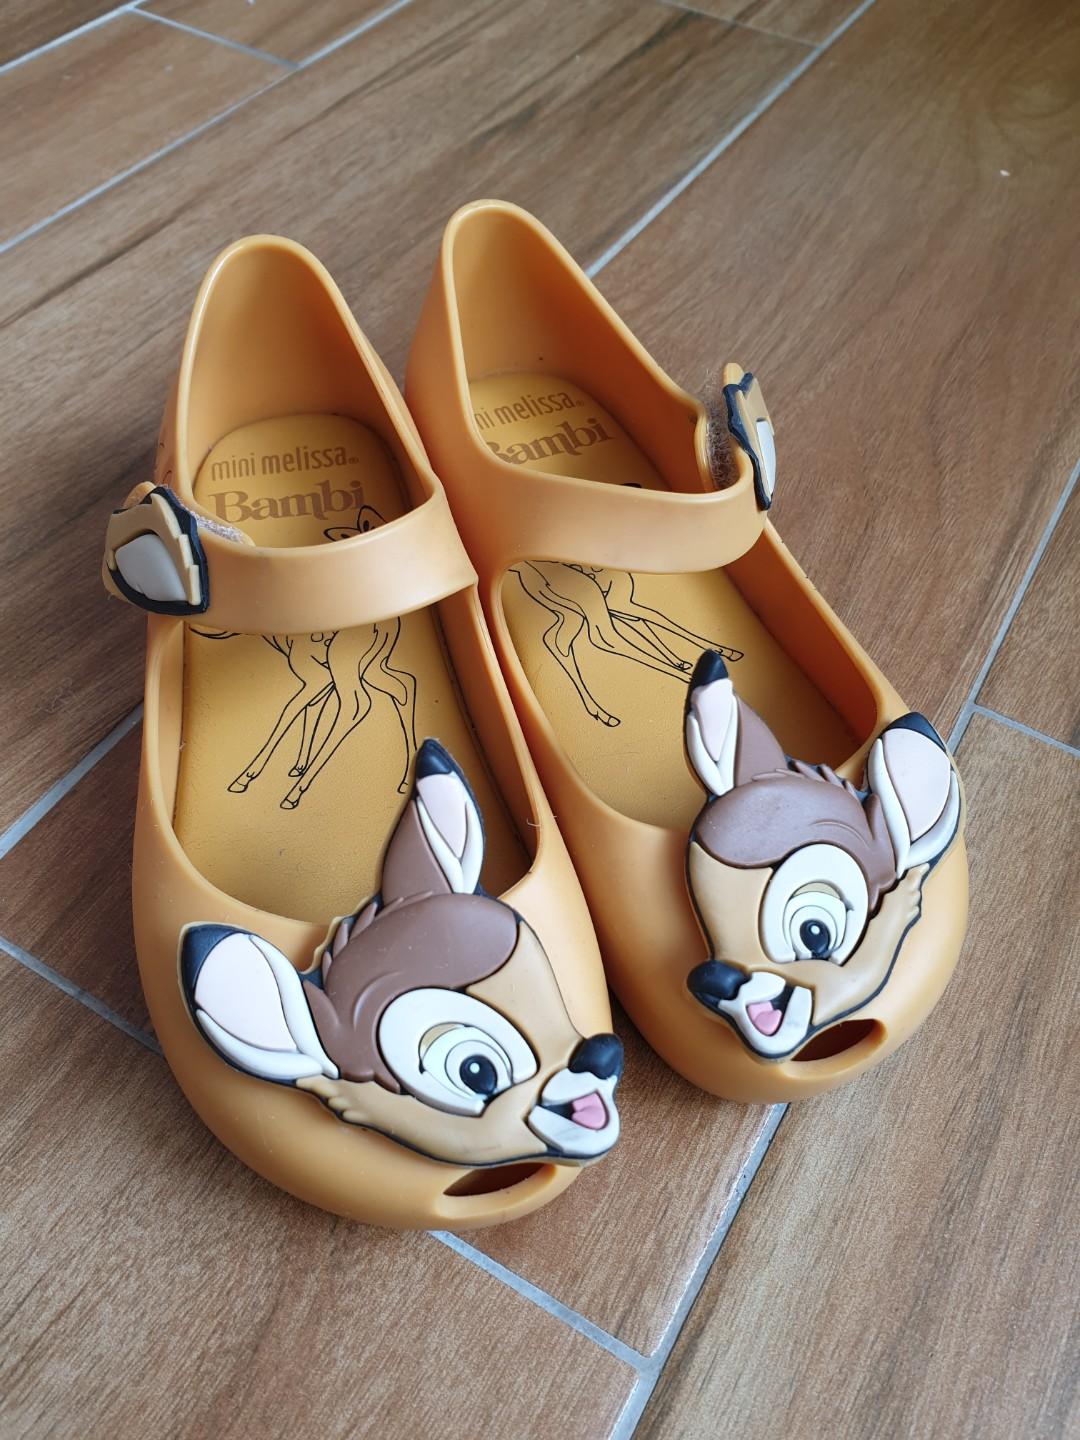 Mini Melissa Bambi Kids Shoes | Size 11 